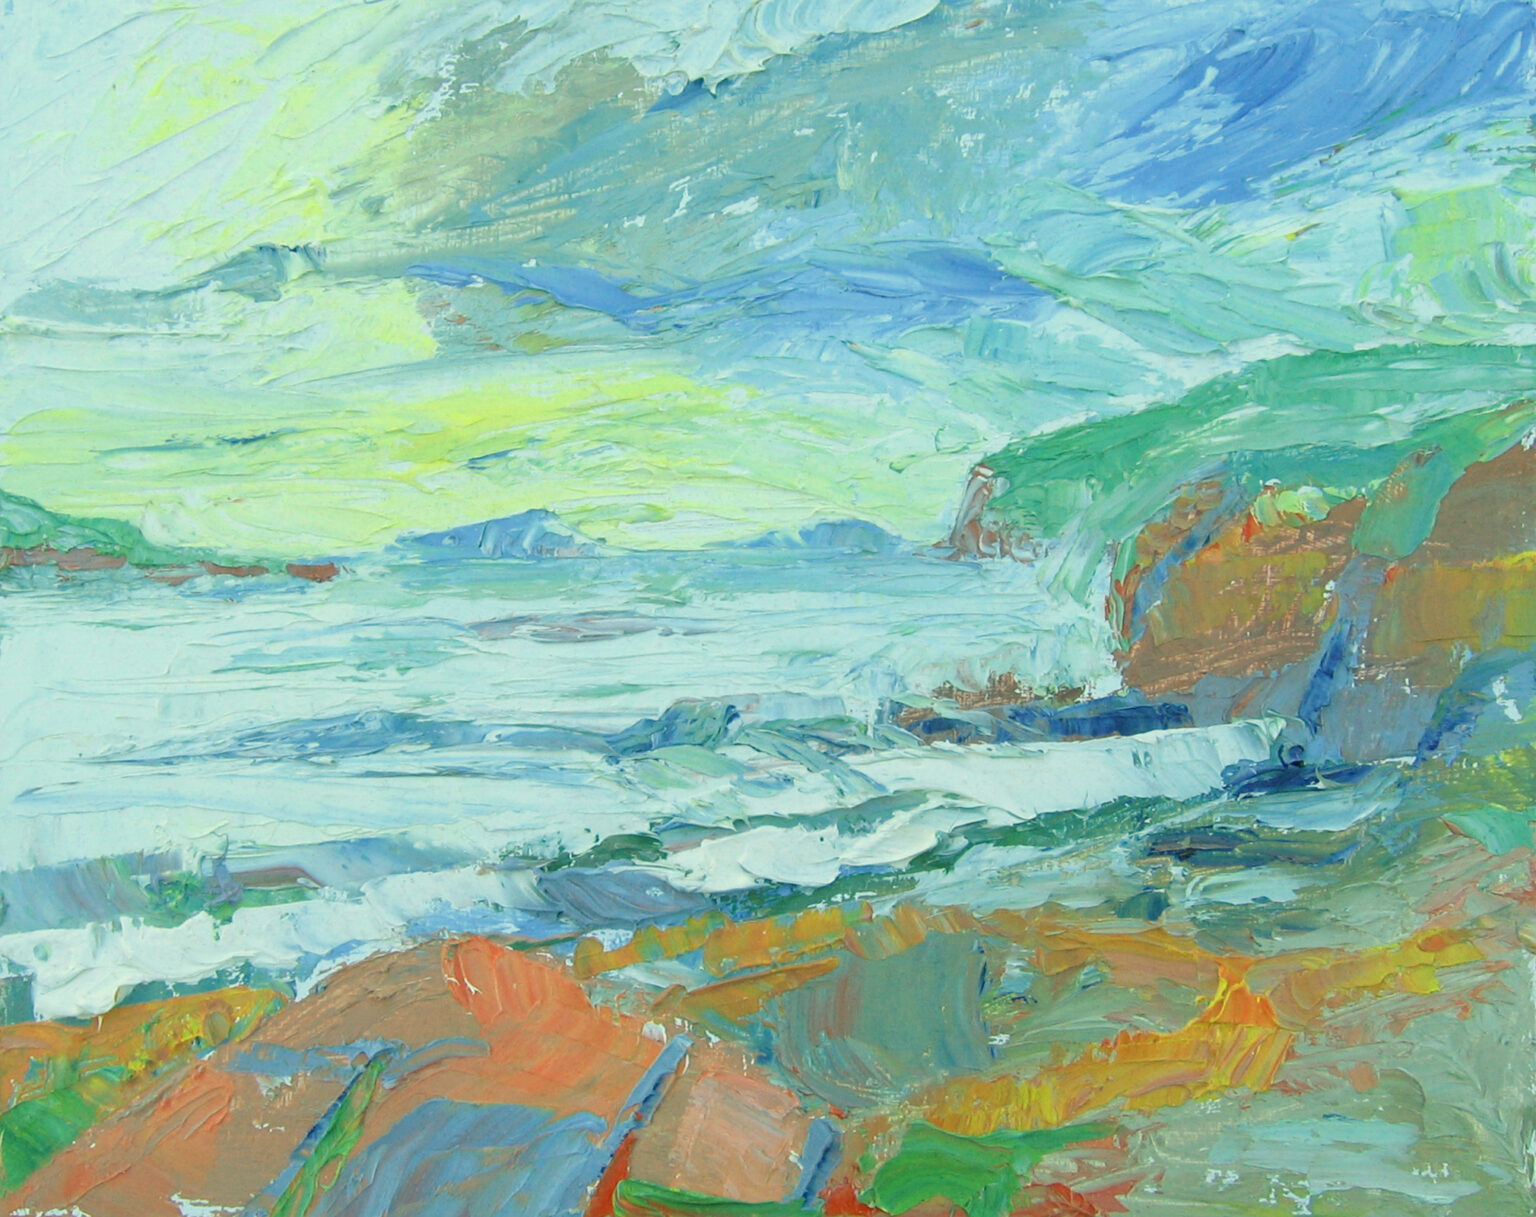 Skye sea painting, oil on wooden panel